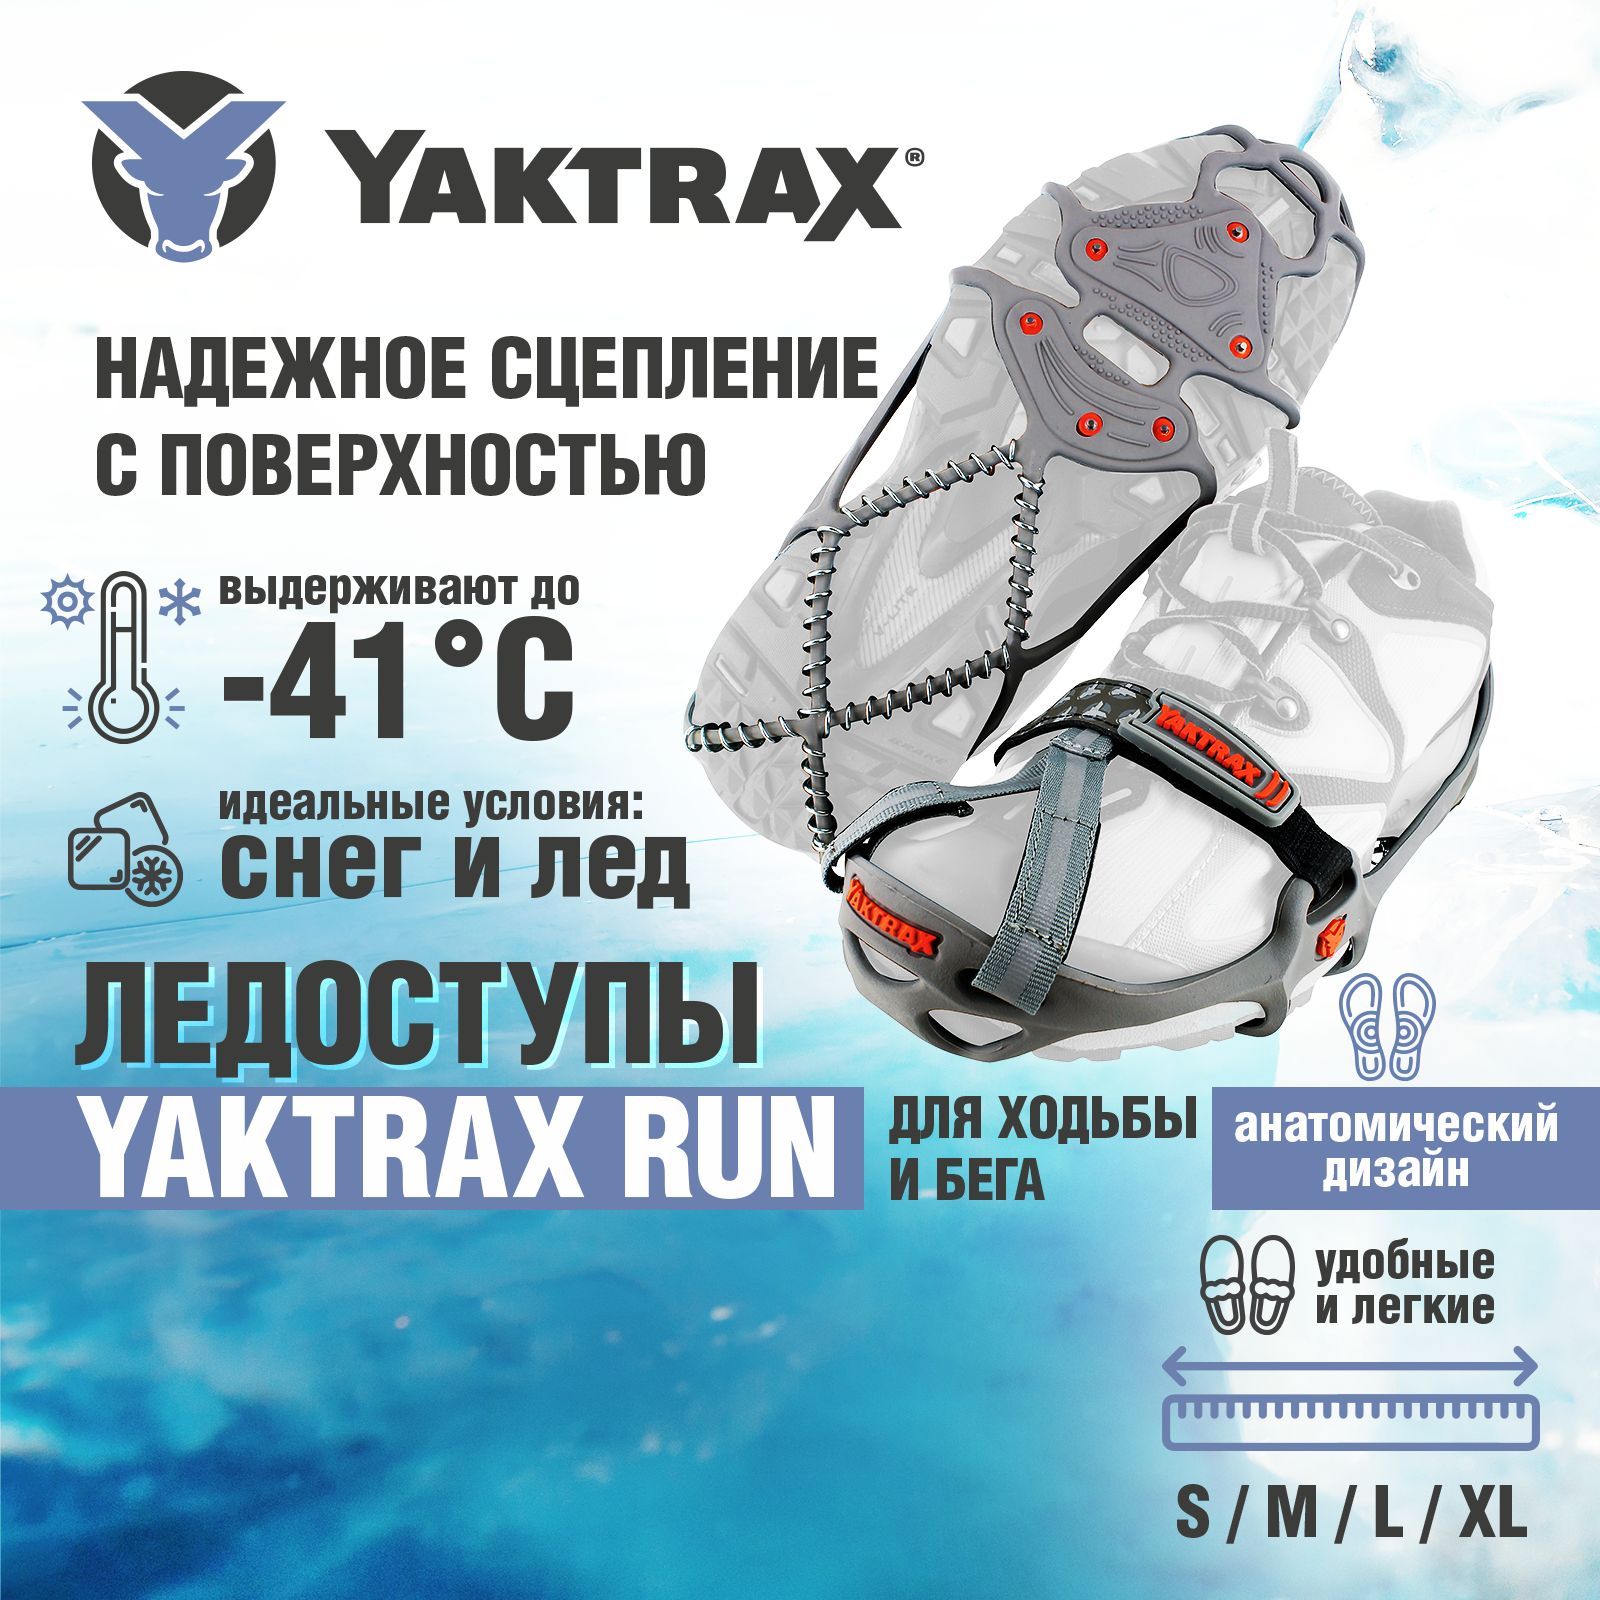 Ледоступы Yaktax Run, размер 46+